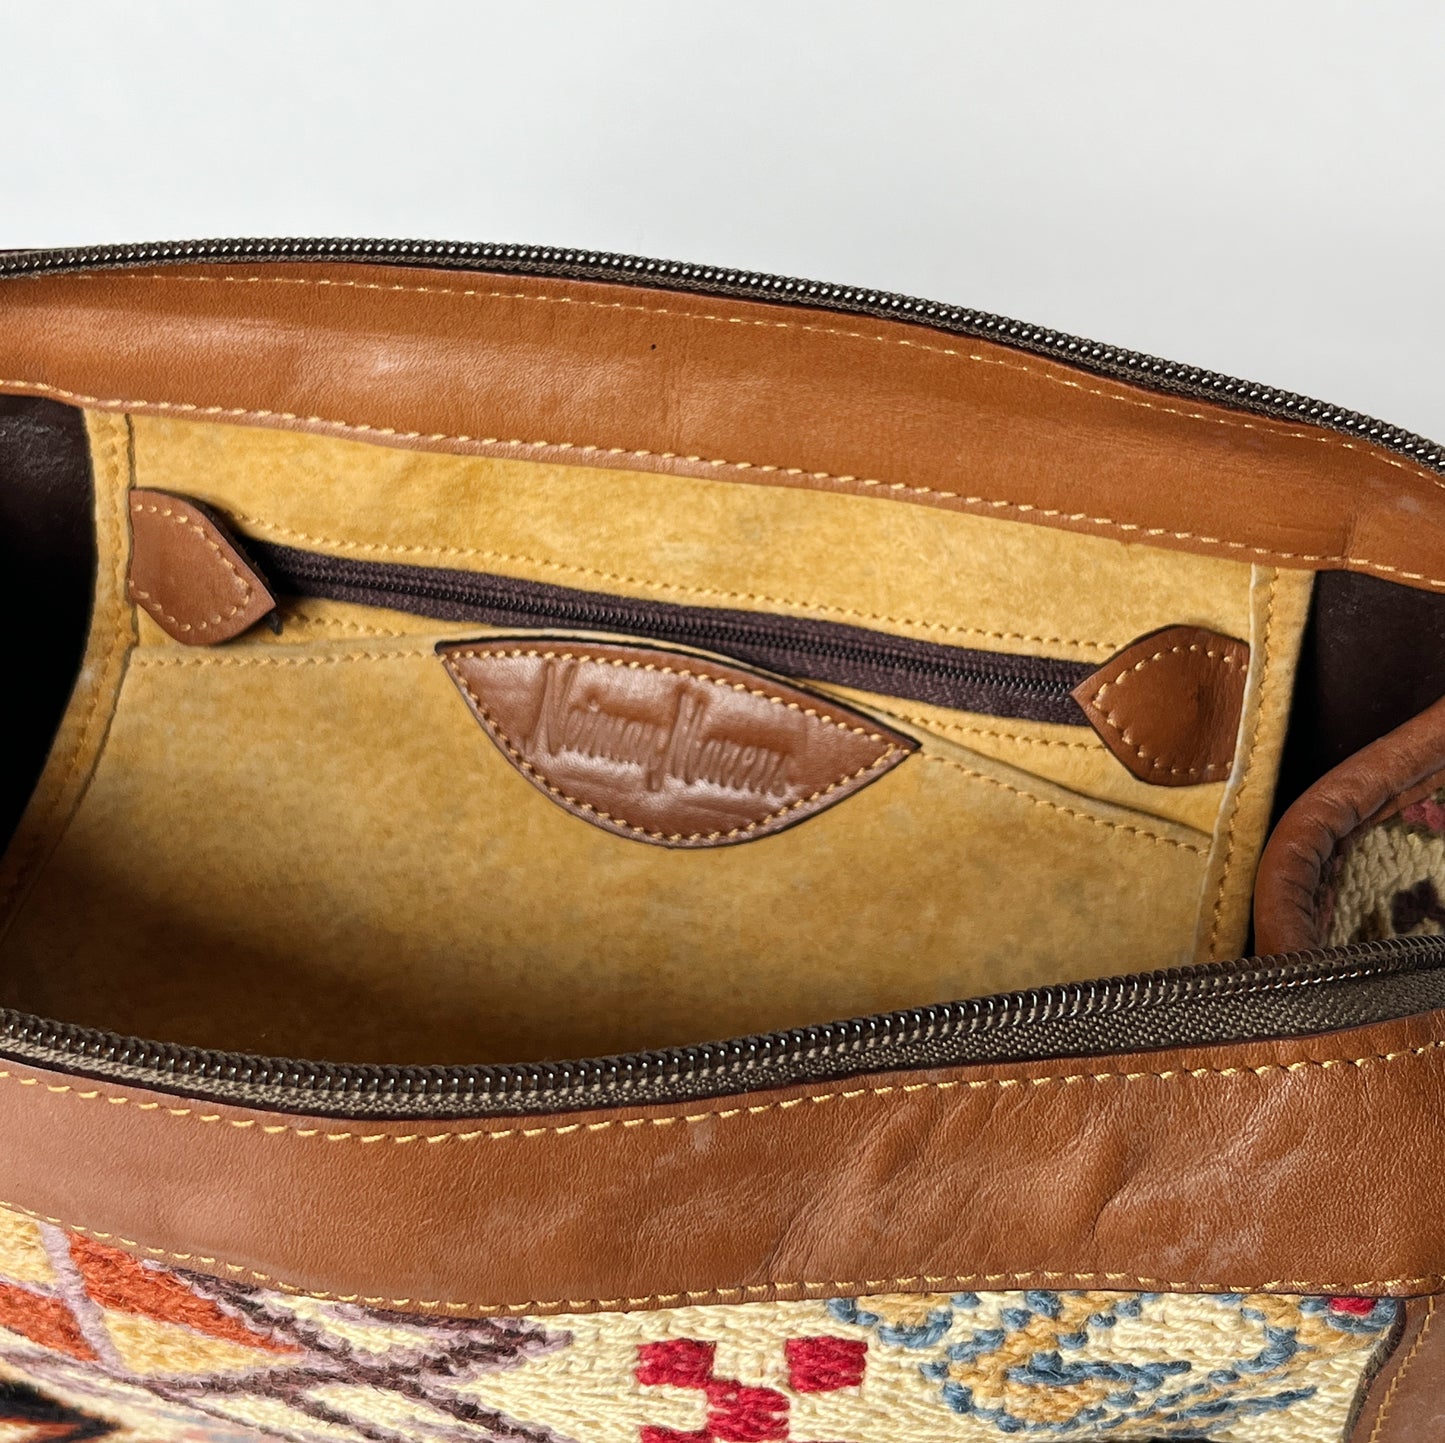 Vintage Nieman Marcus Woven Kilim Handbag